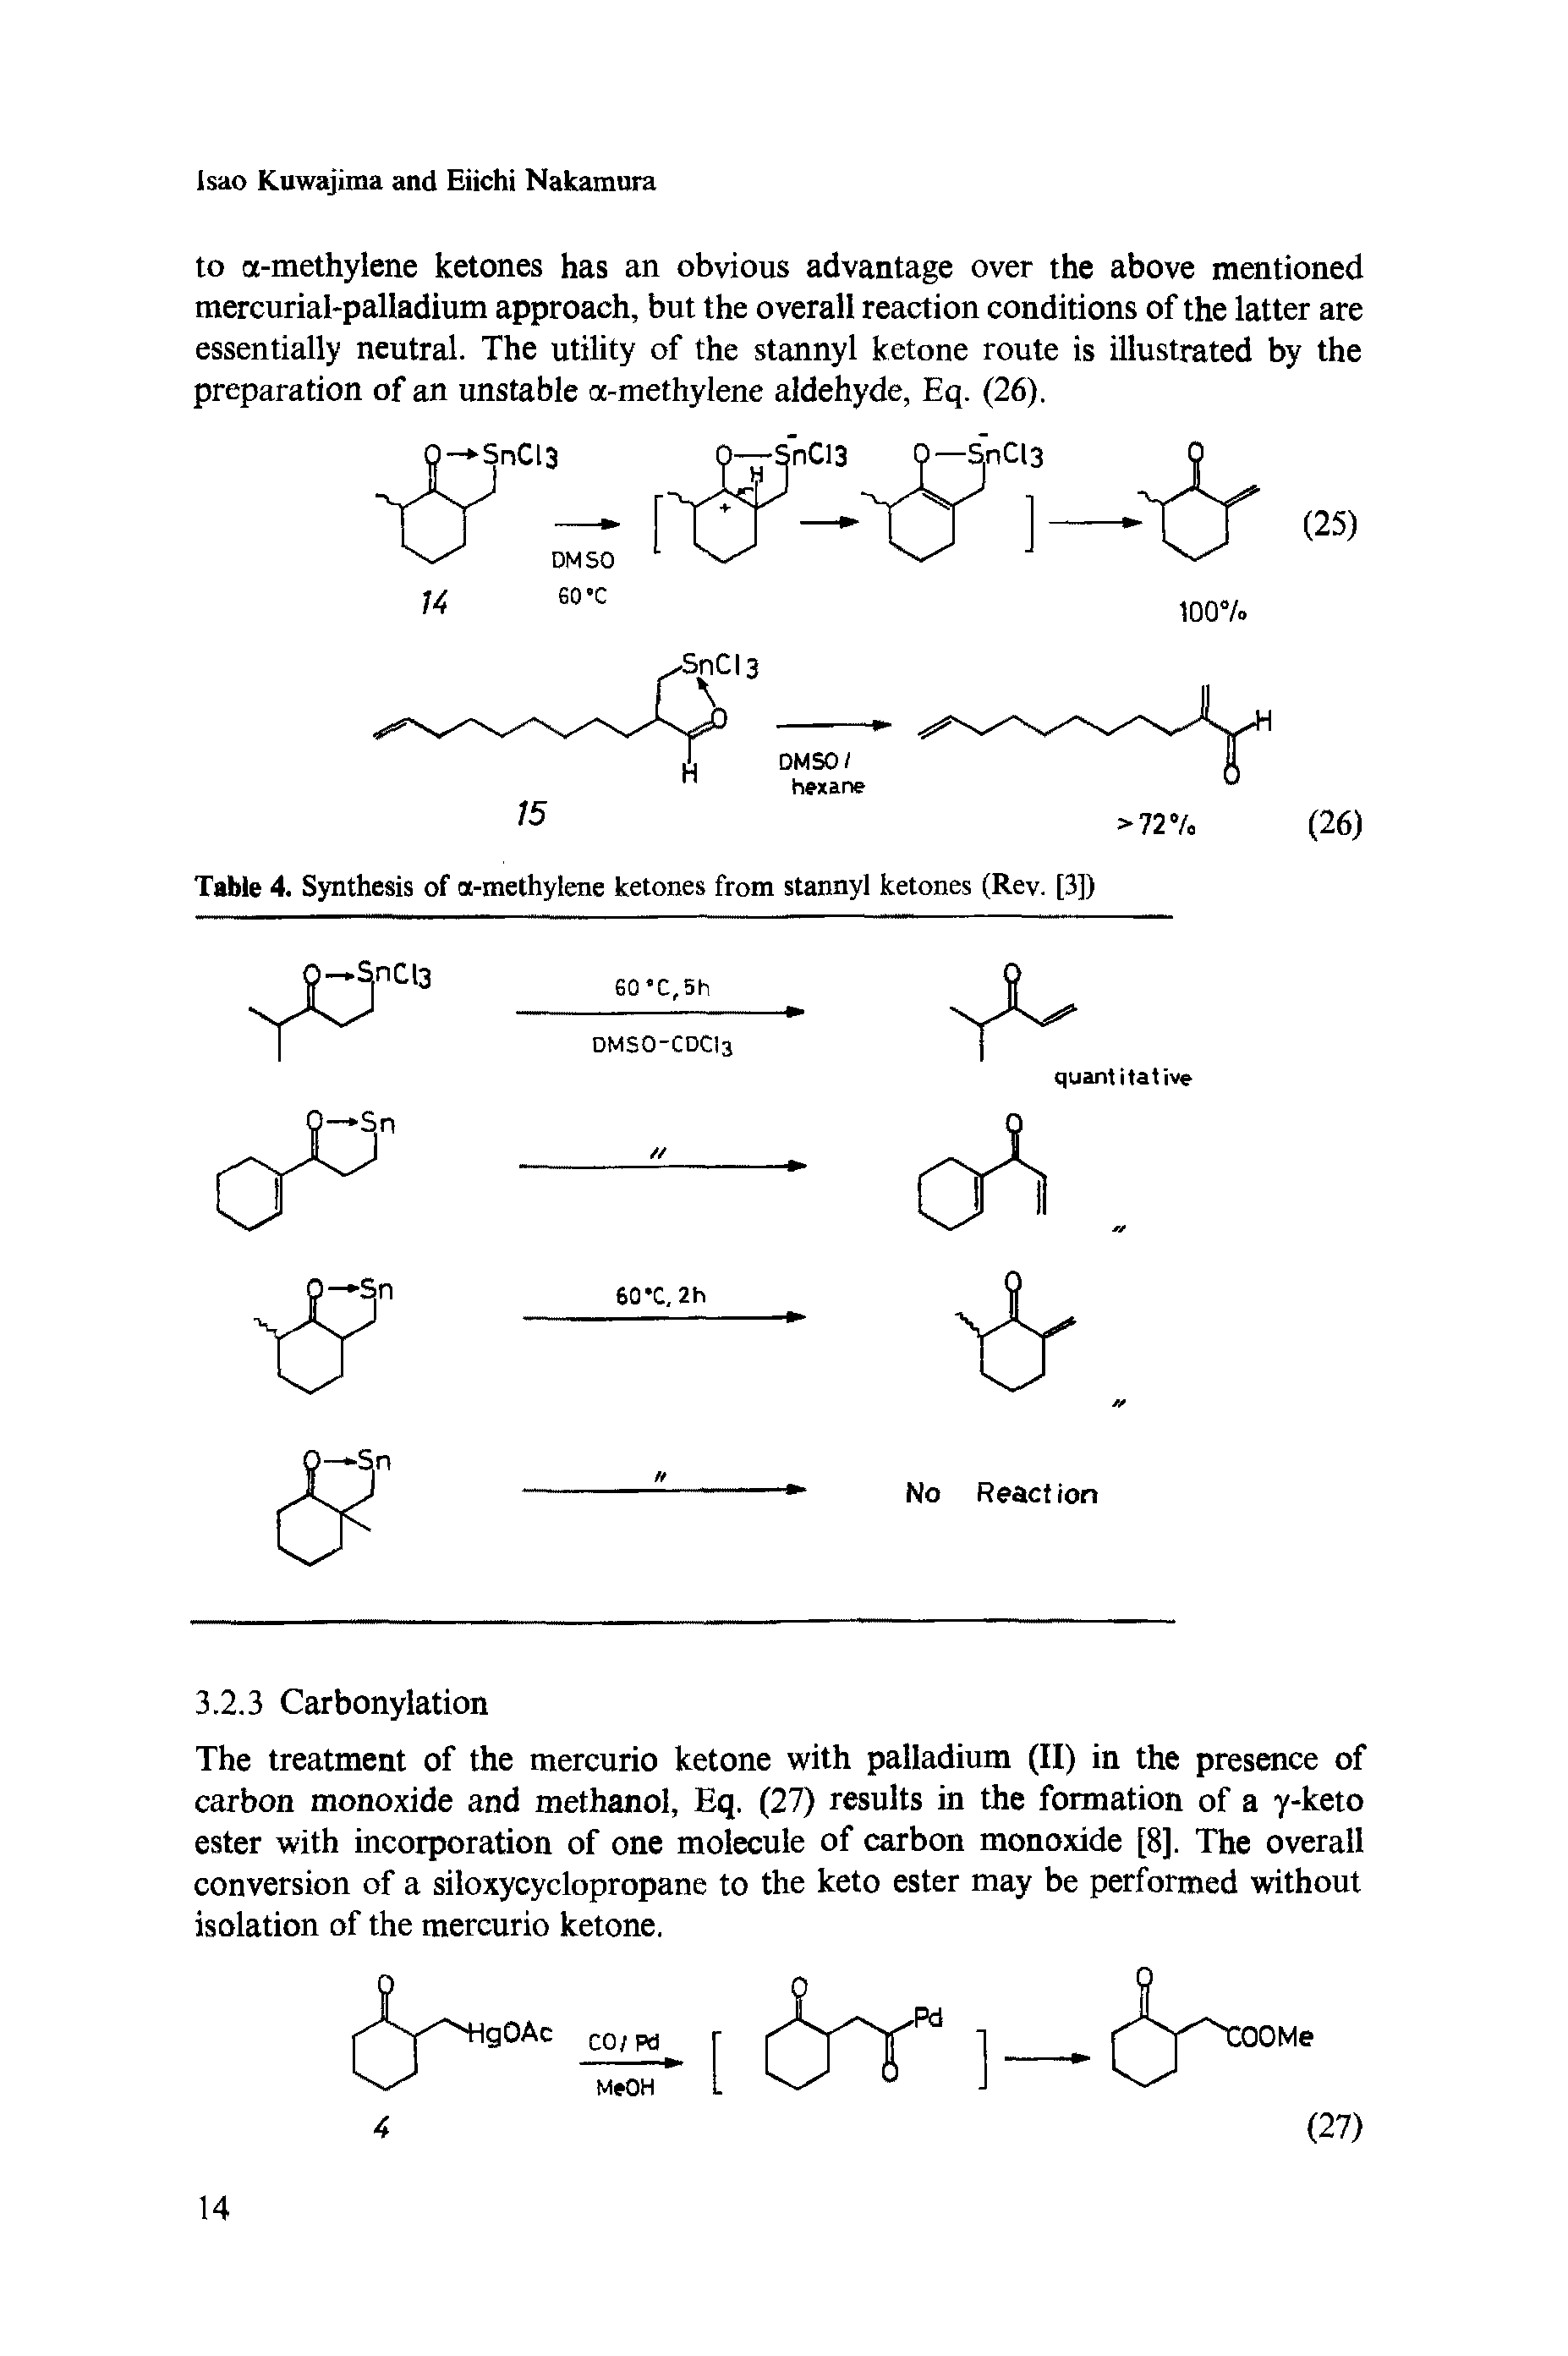 Table 4. Synthesis of a-methylene ketones from stannyl ketones (Rev. [3])...